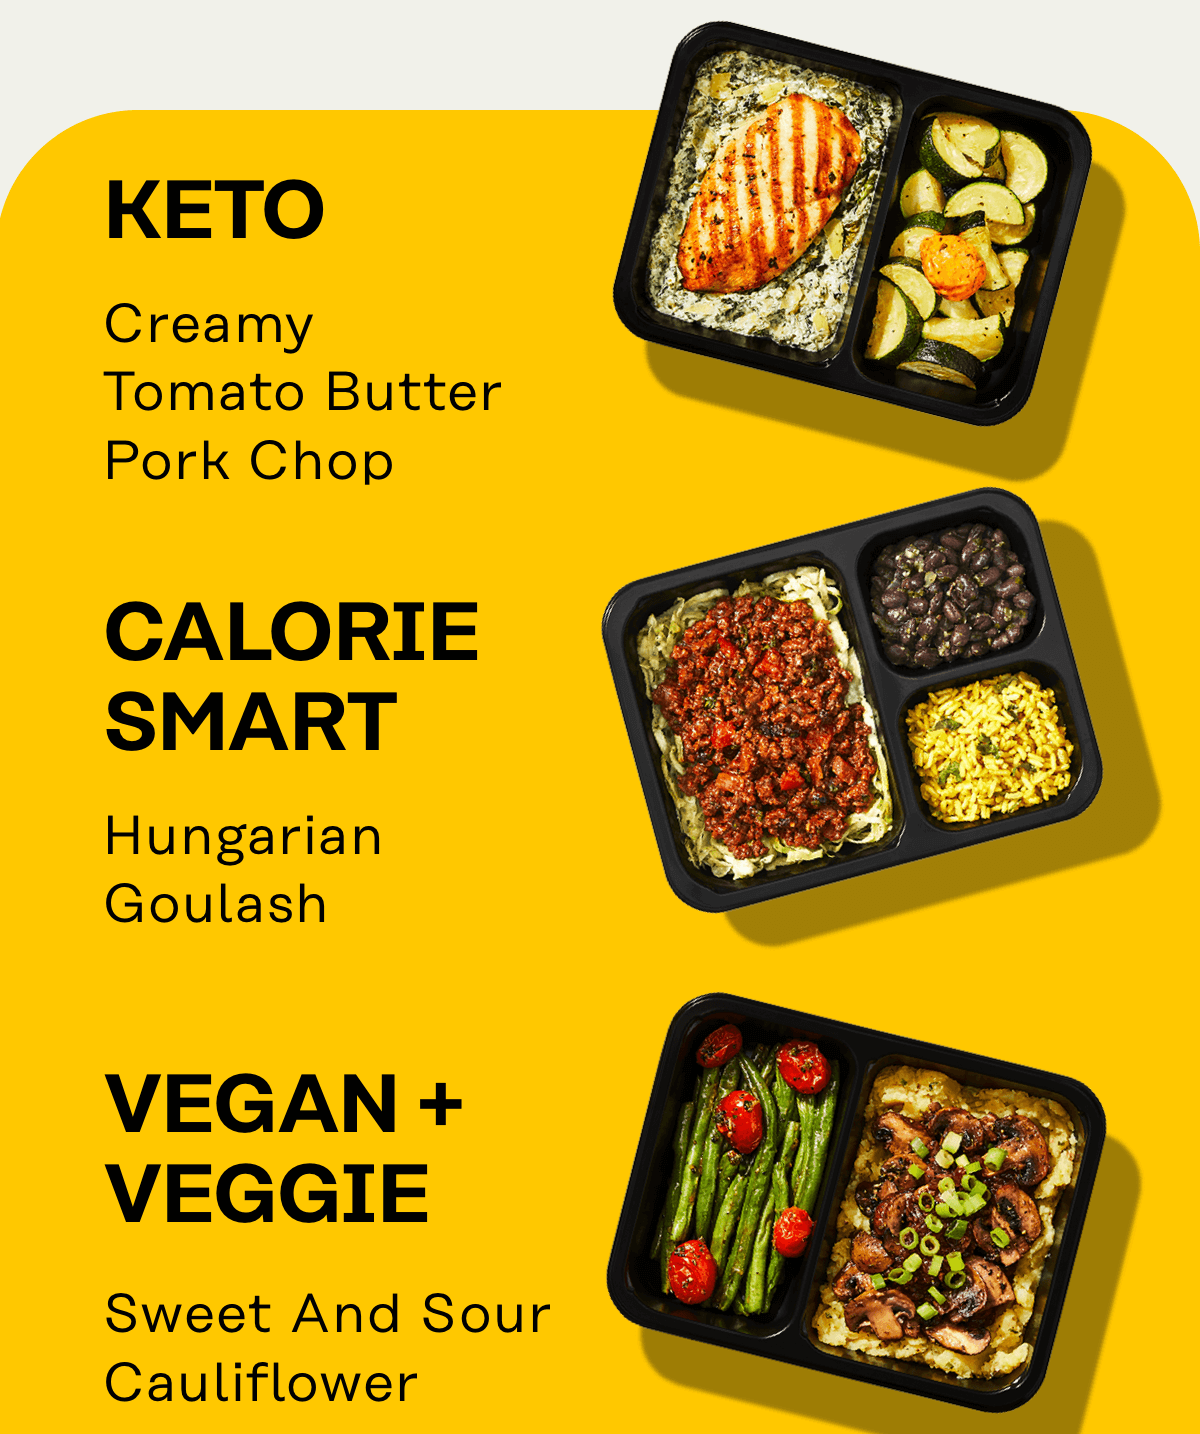 Keto, Calorie Smart, Vegan + Veggie, Protein Plus